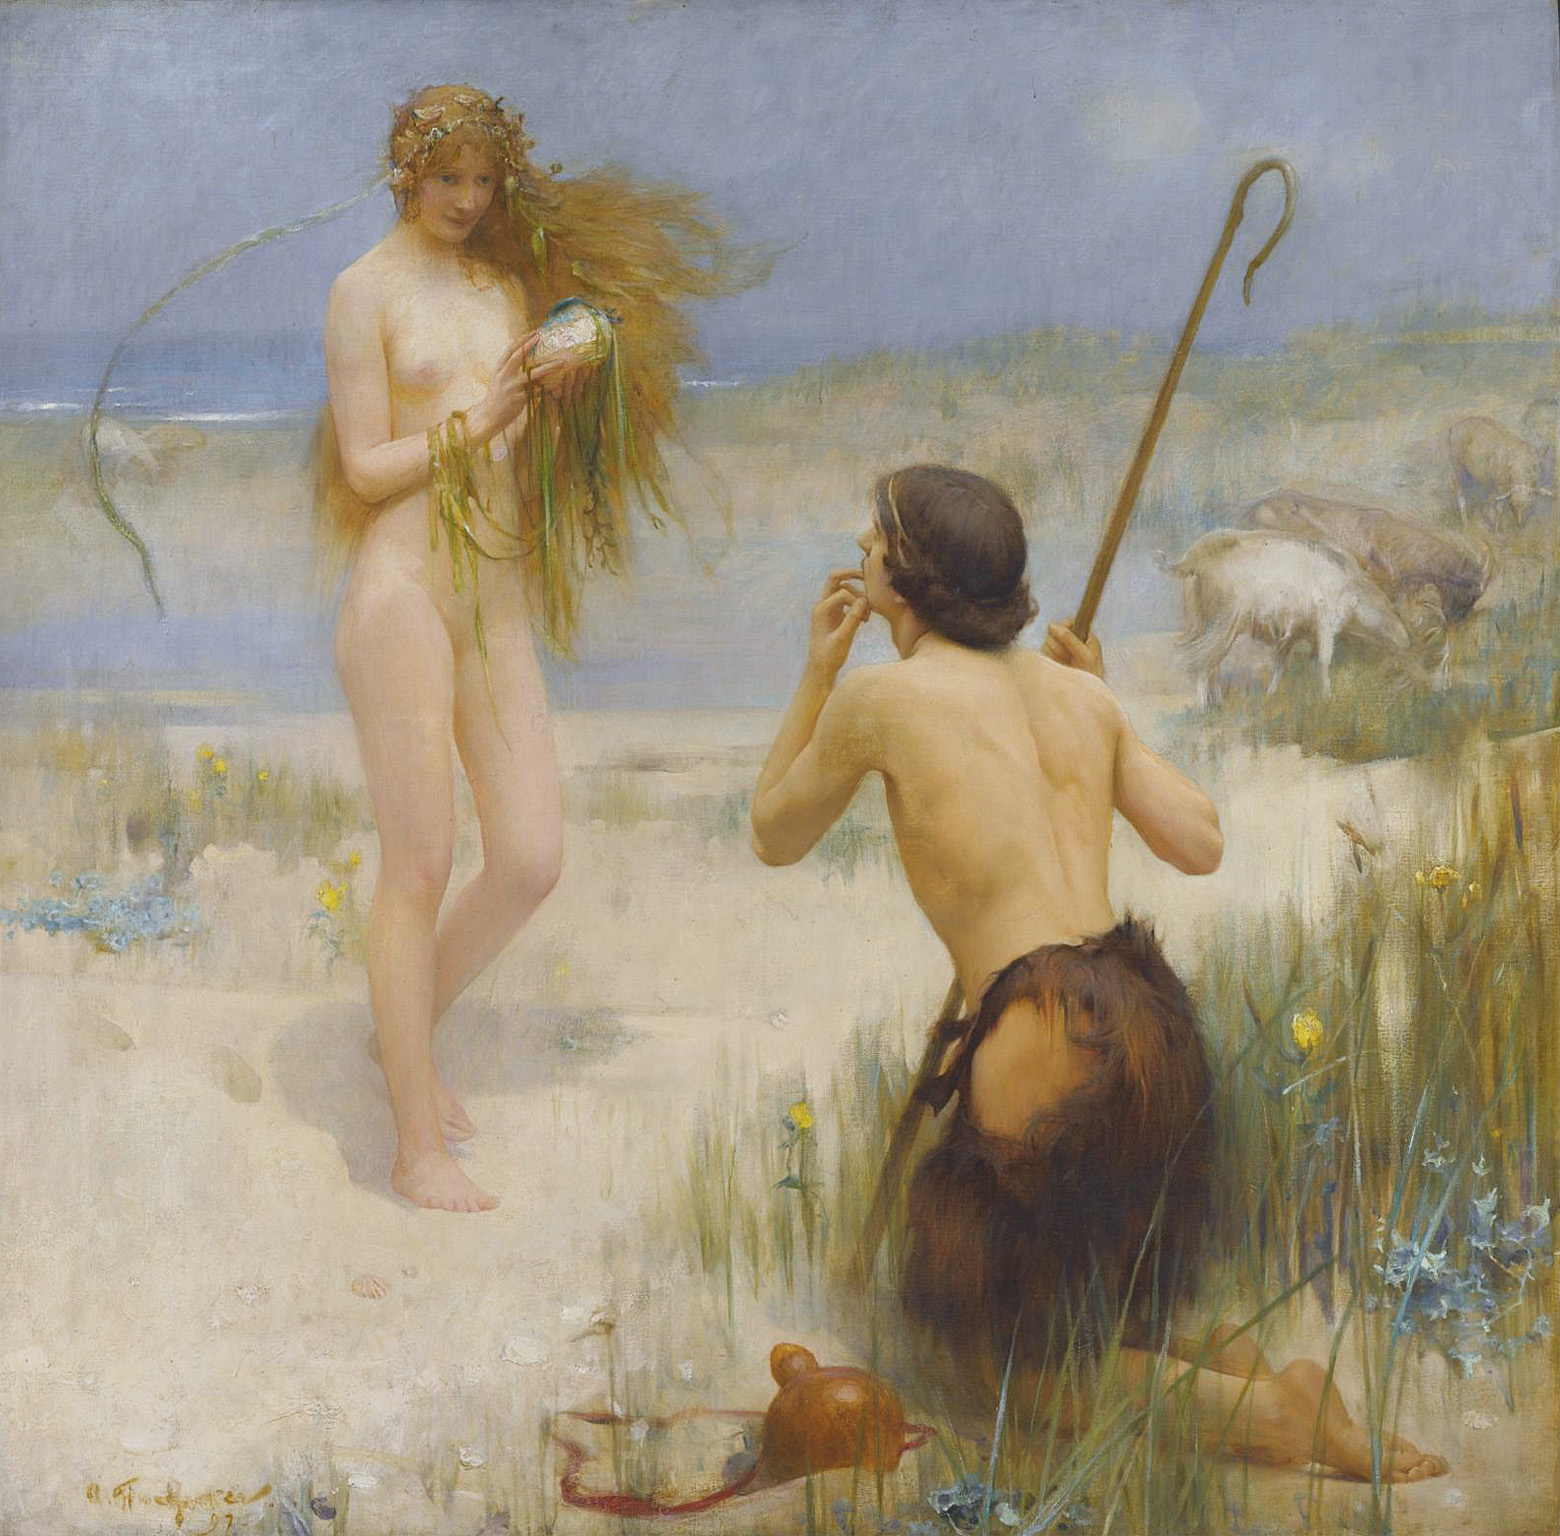 The Sea Maiden by Arthur Hacker, 1897